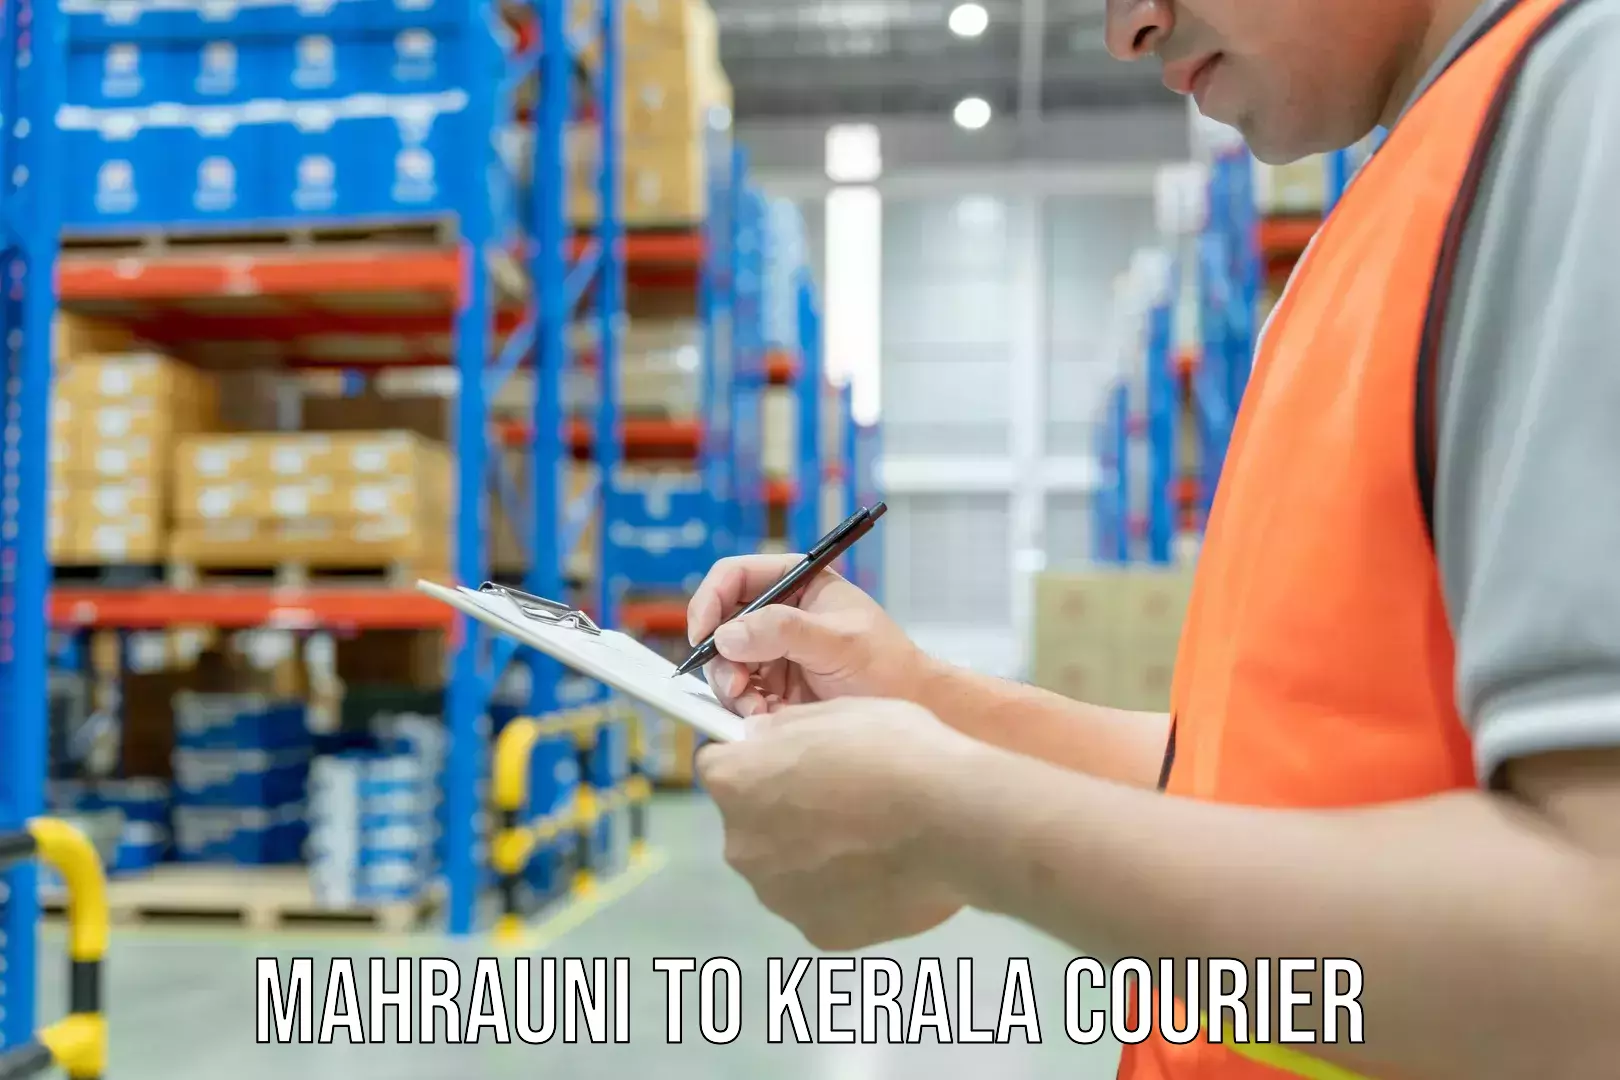 Professional moving company Mahrauni to Kerala